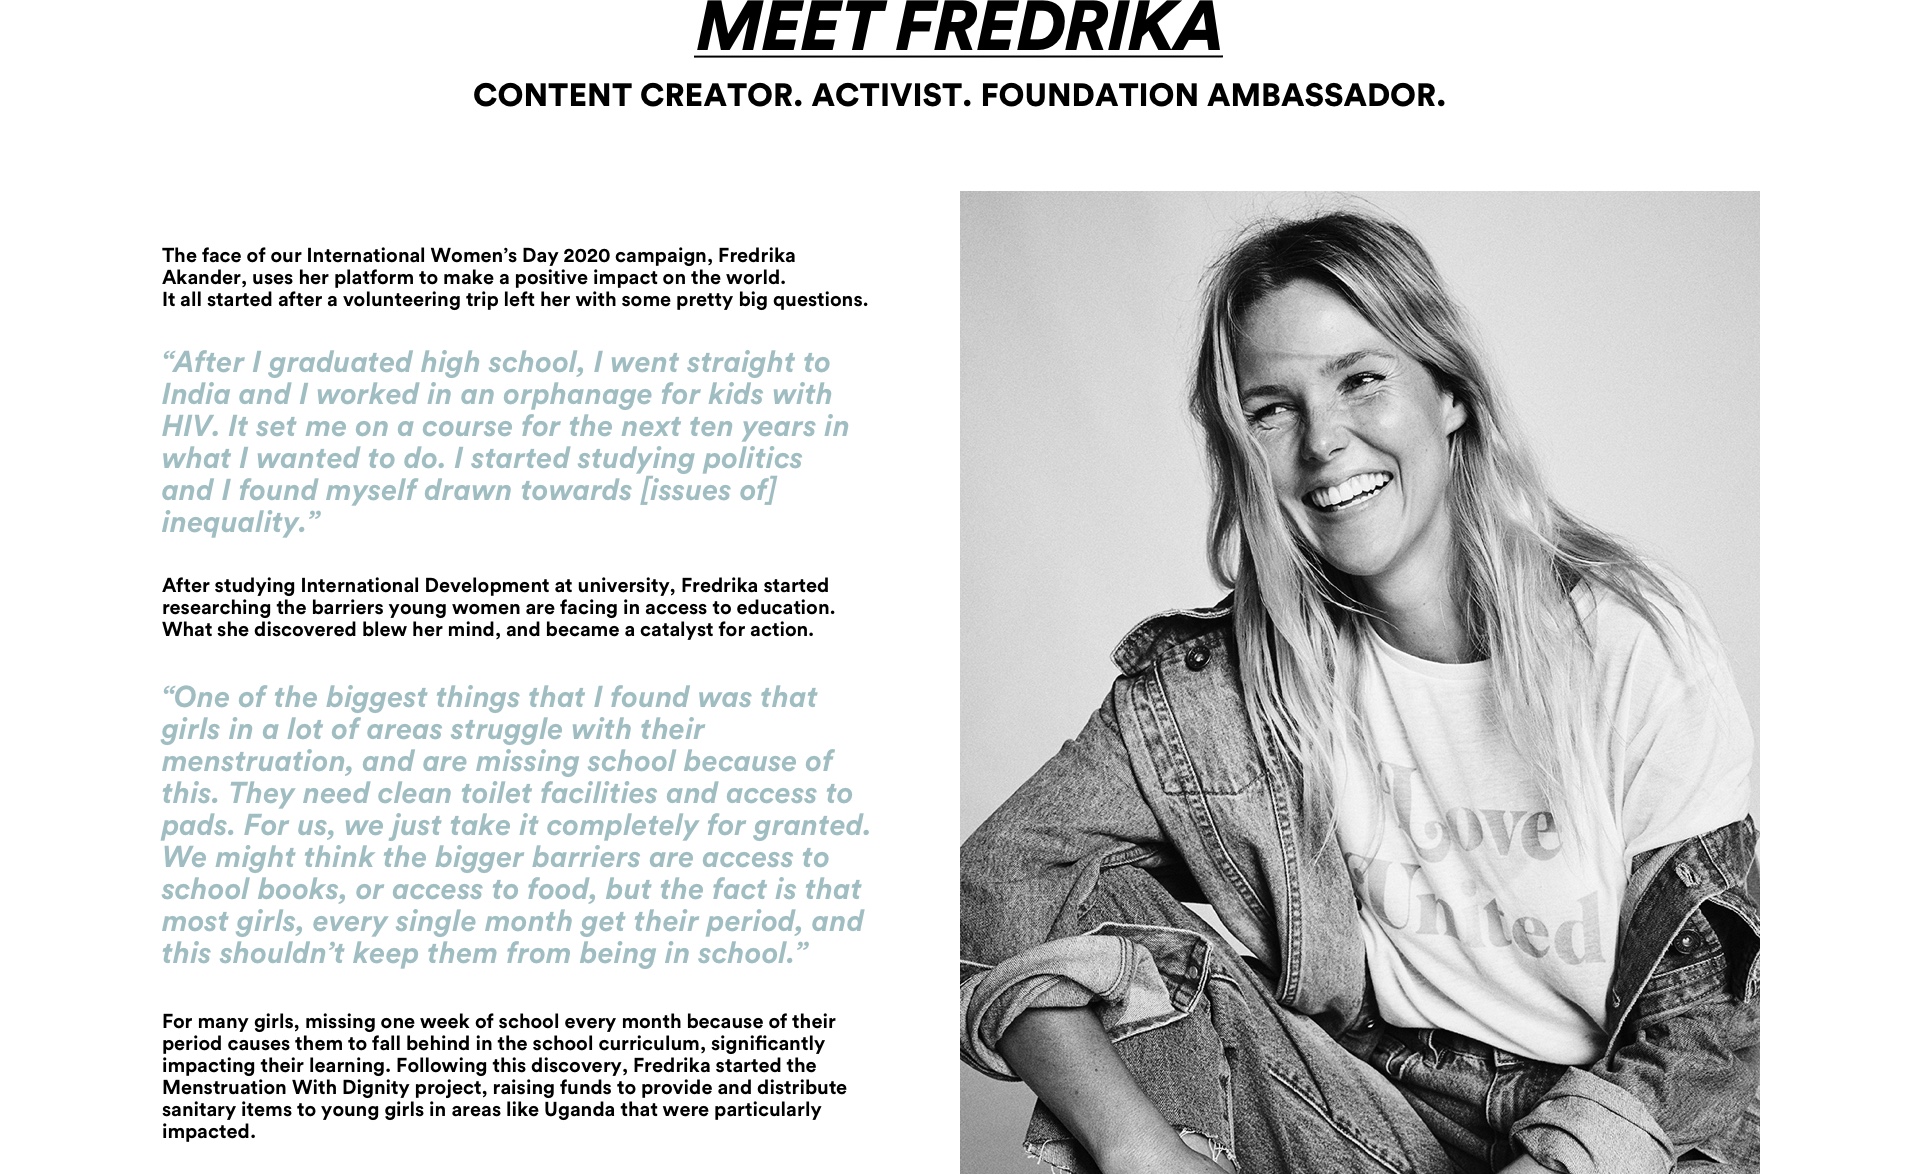 Meet Fredrika Content Creator. Activist. Foundation Ambassador